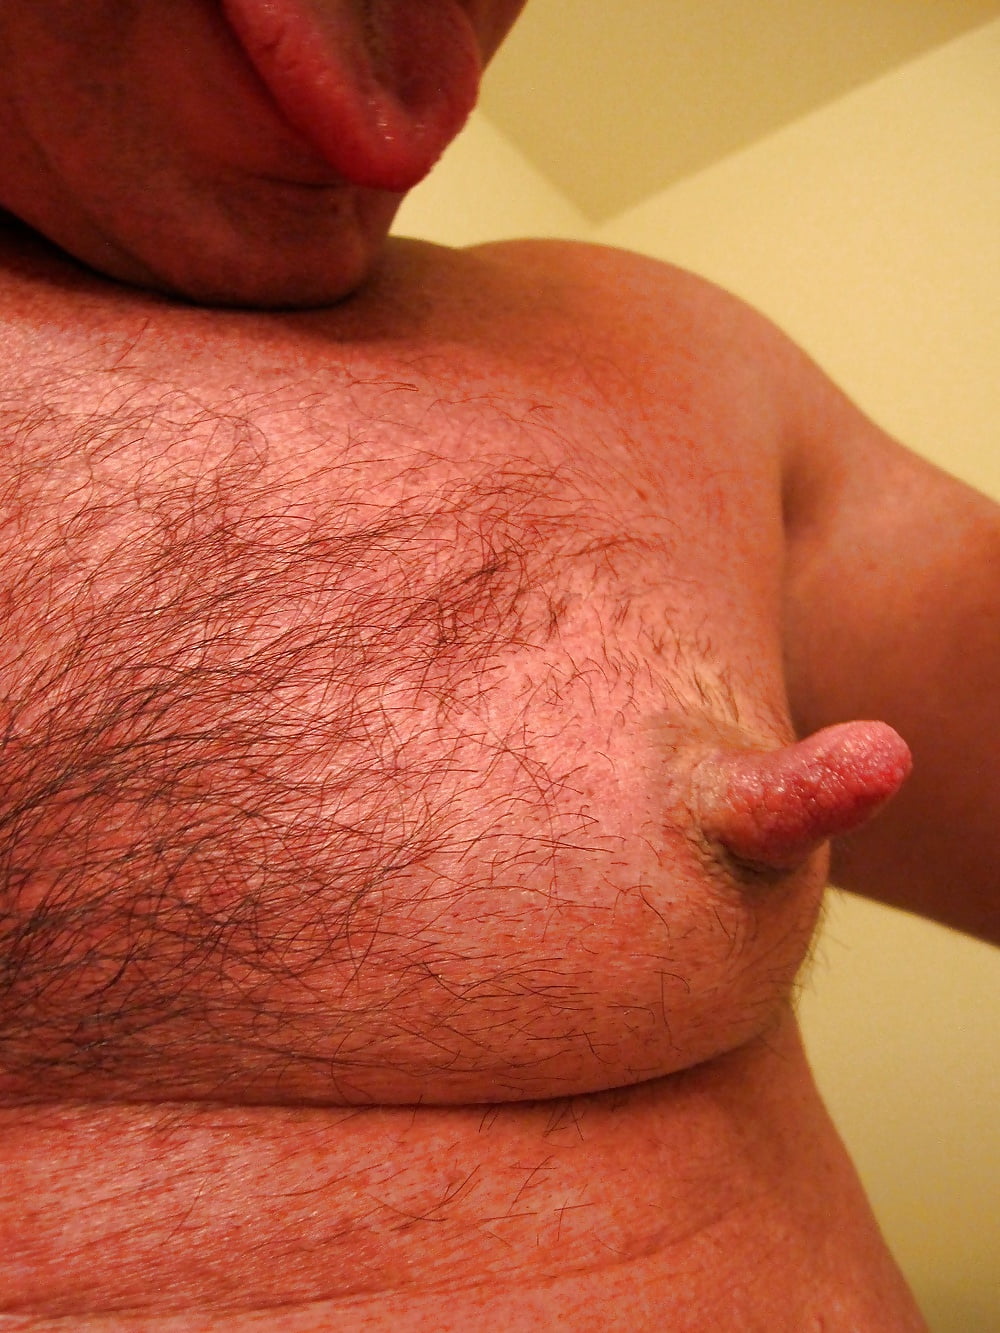 отвисаете груди мужчин фото 66